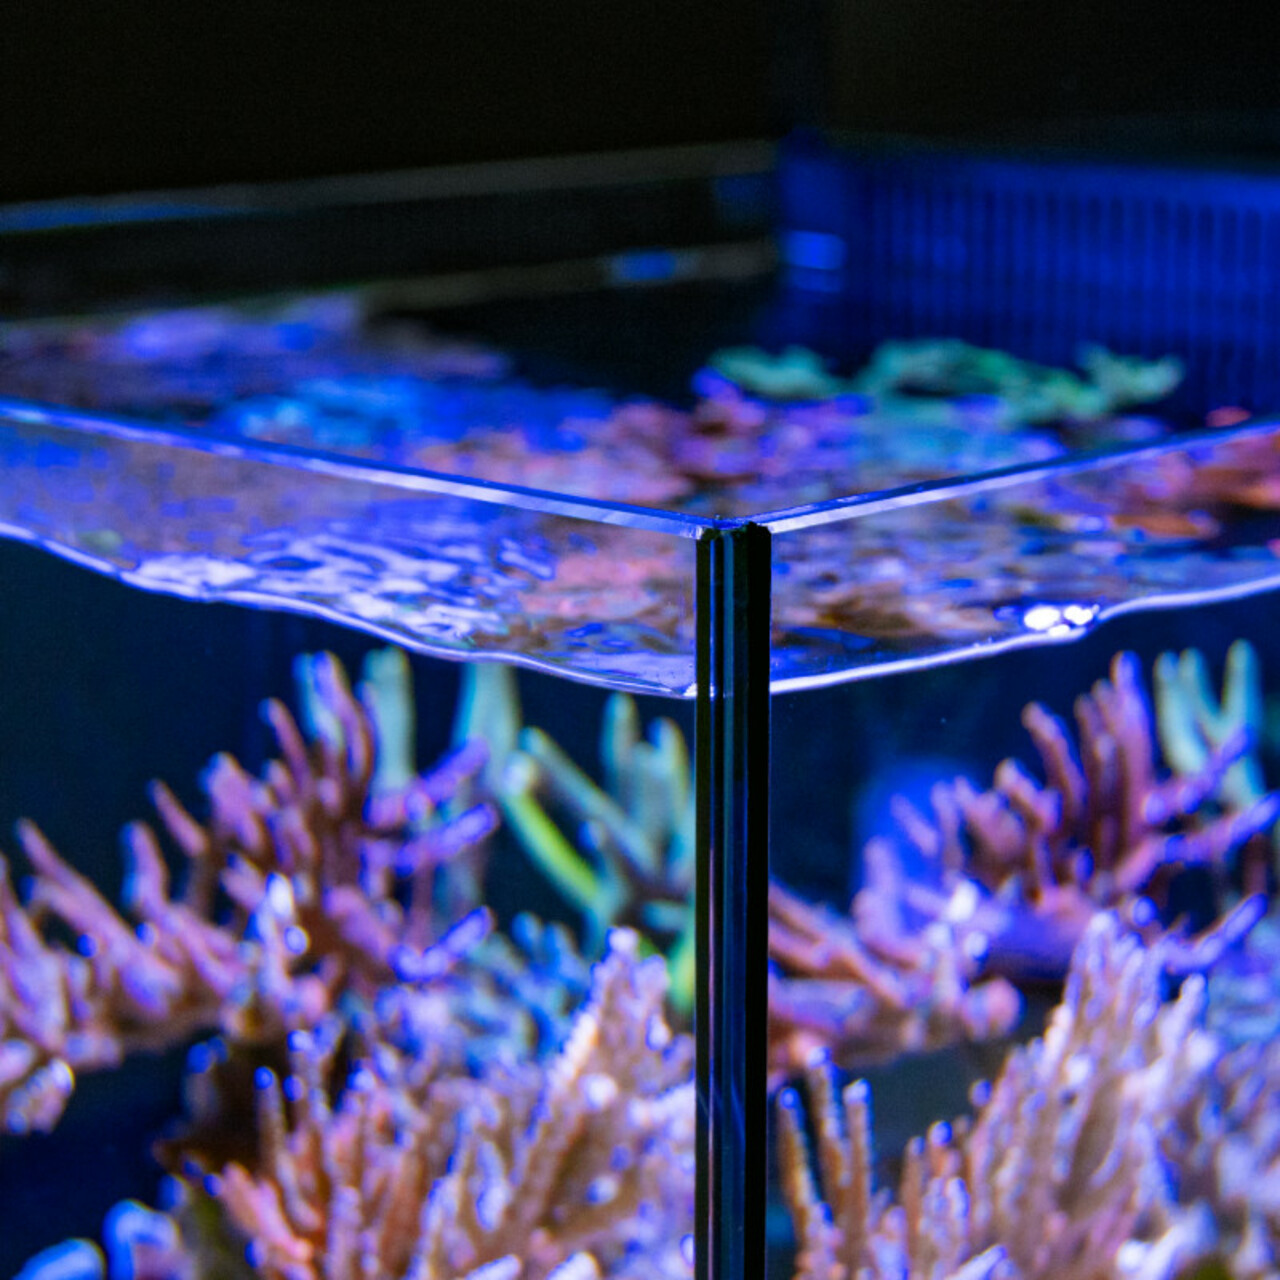 Red Sea Max Nano Cube Aquarium